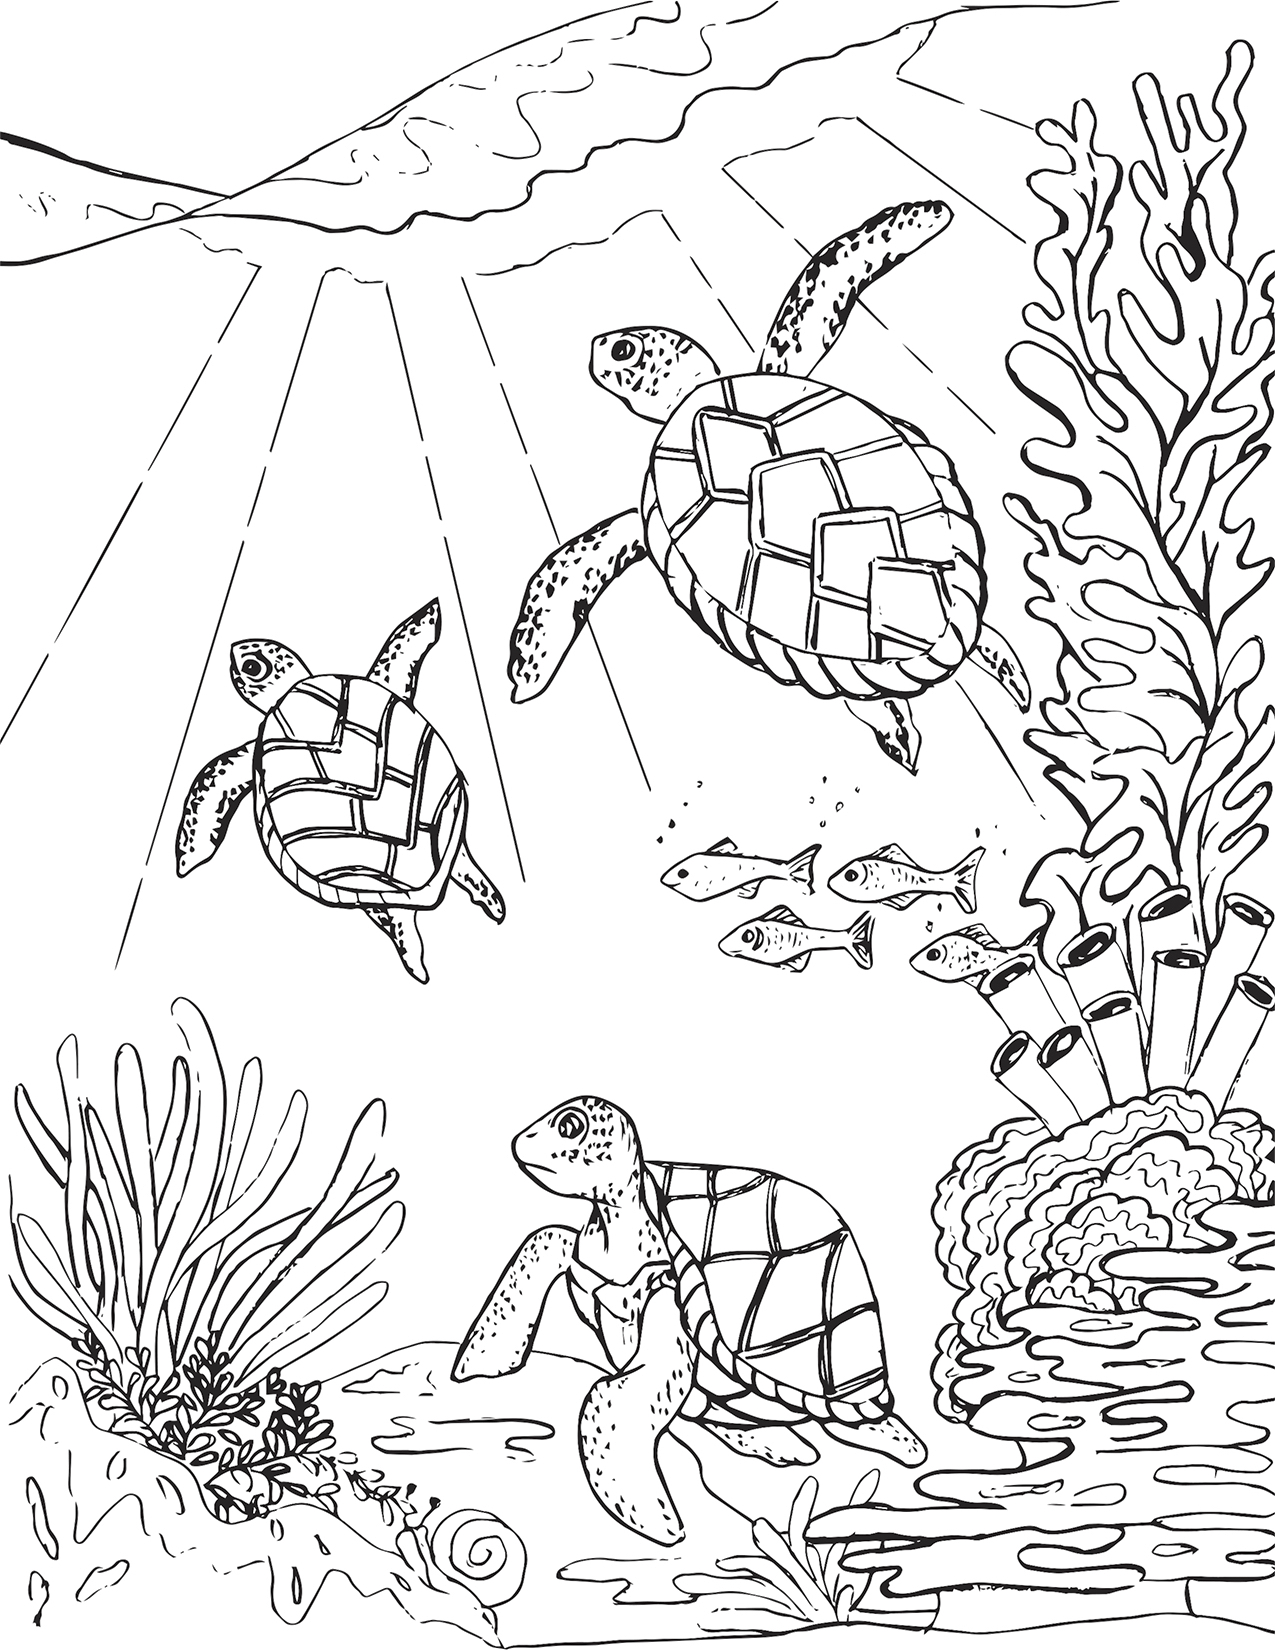 Three sea turtles coloring page â mermaid coloring pages